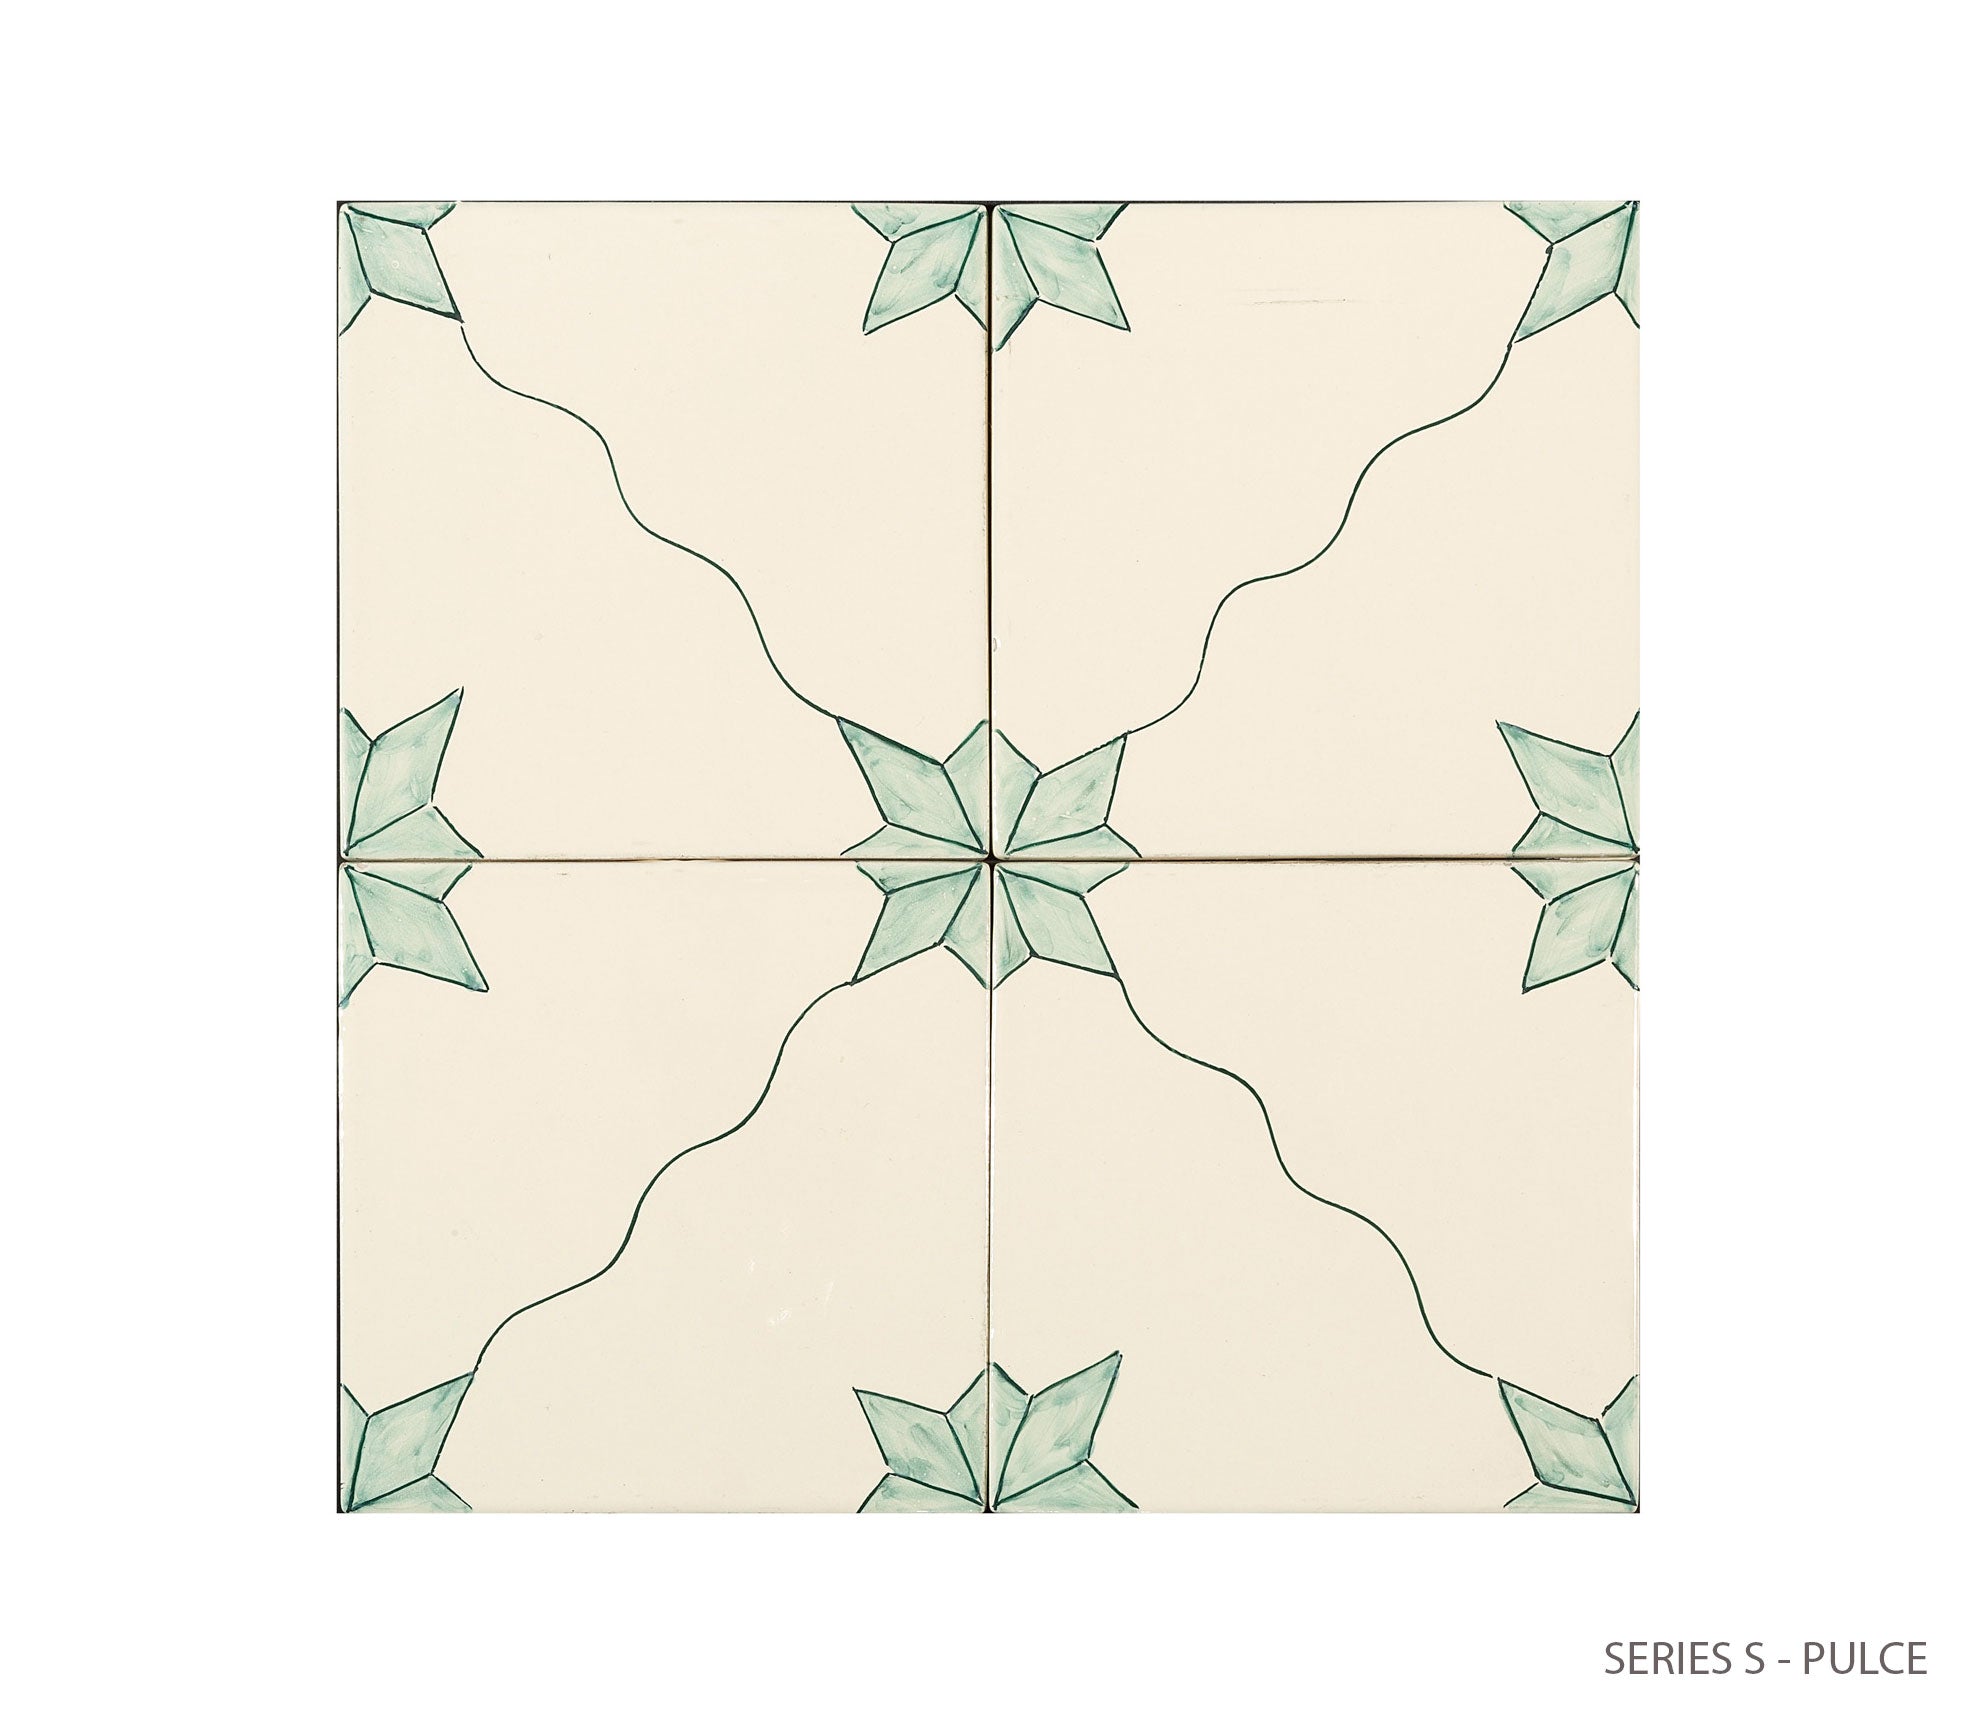 Series S Italian Handpainted Tiles Product Image 16